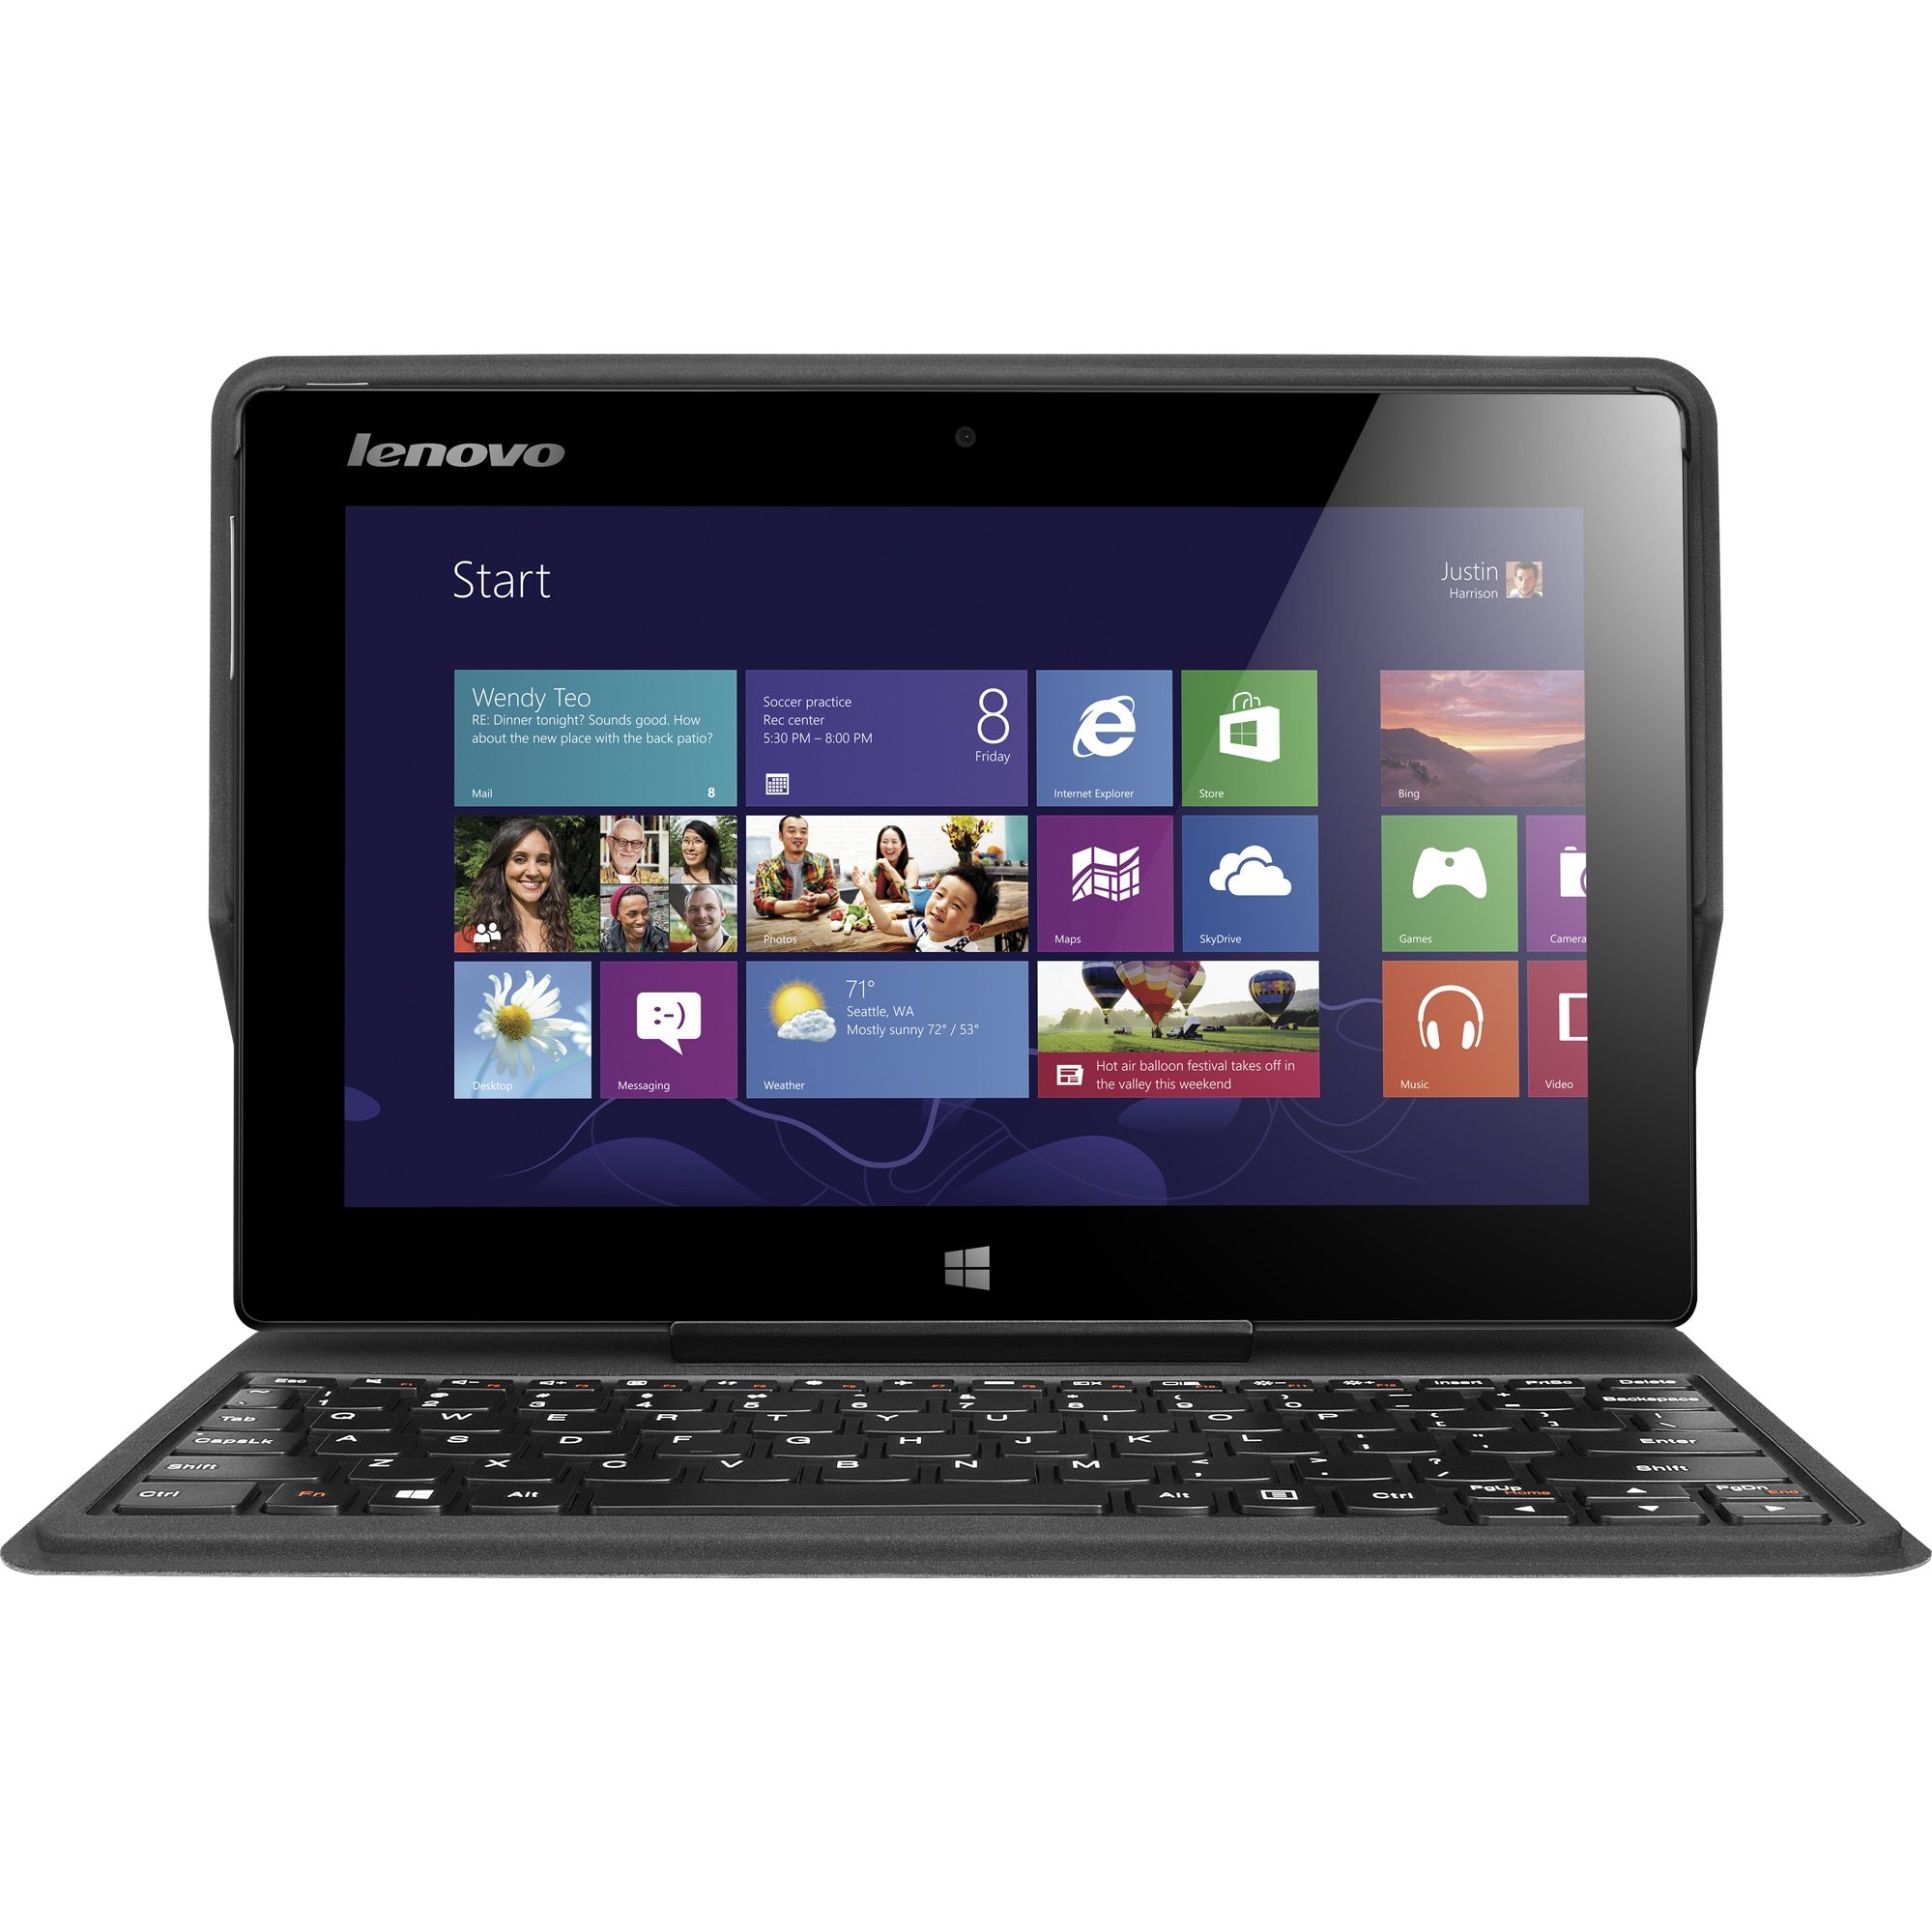 Lenovo MiiX 10, tablet Windows 8